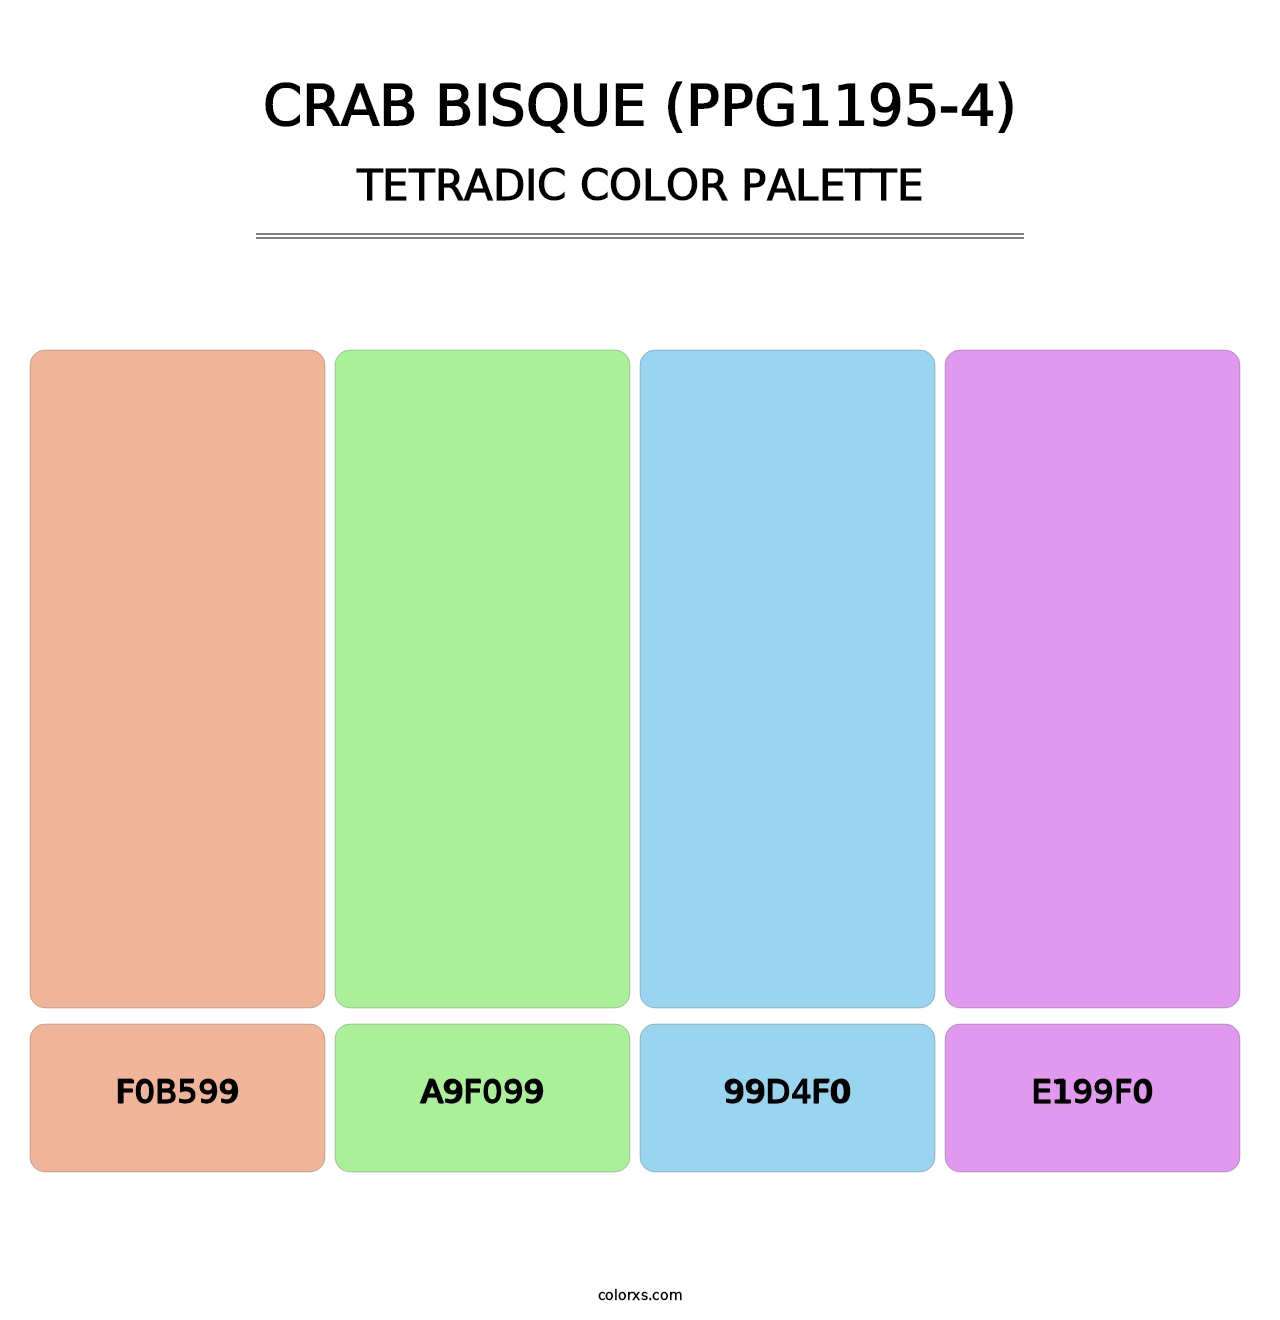 Crab Bisque (PPG1195-4) - Tetradic Color Palette